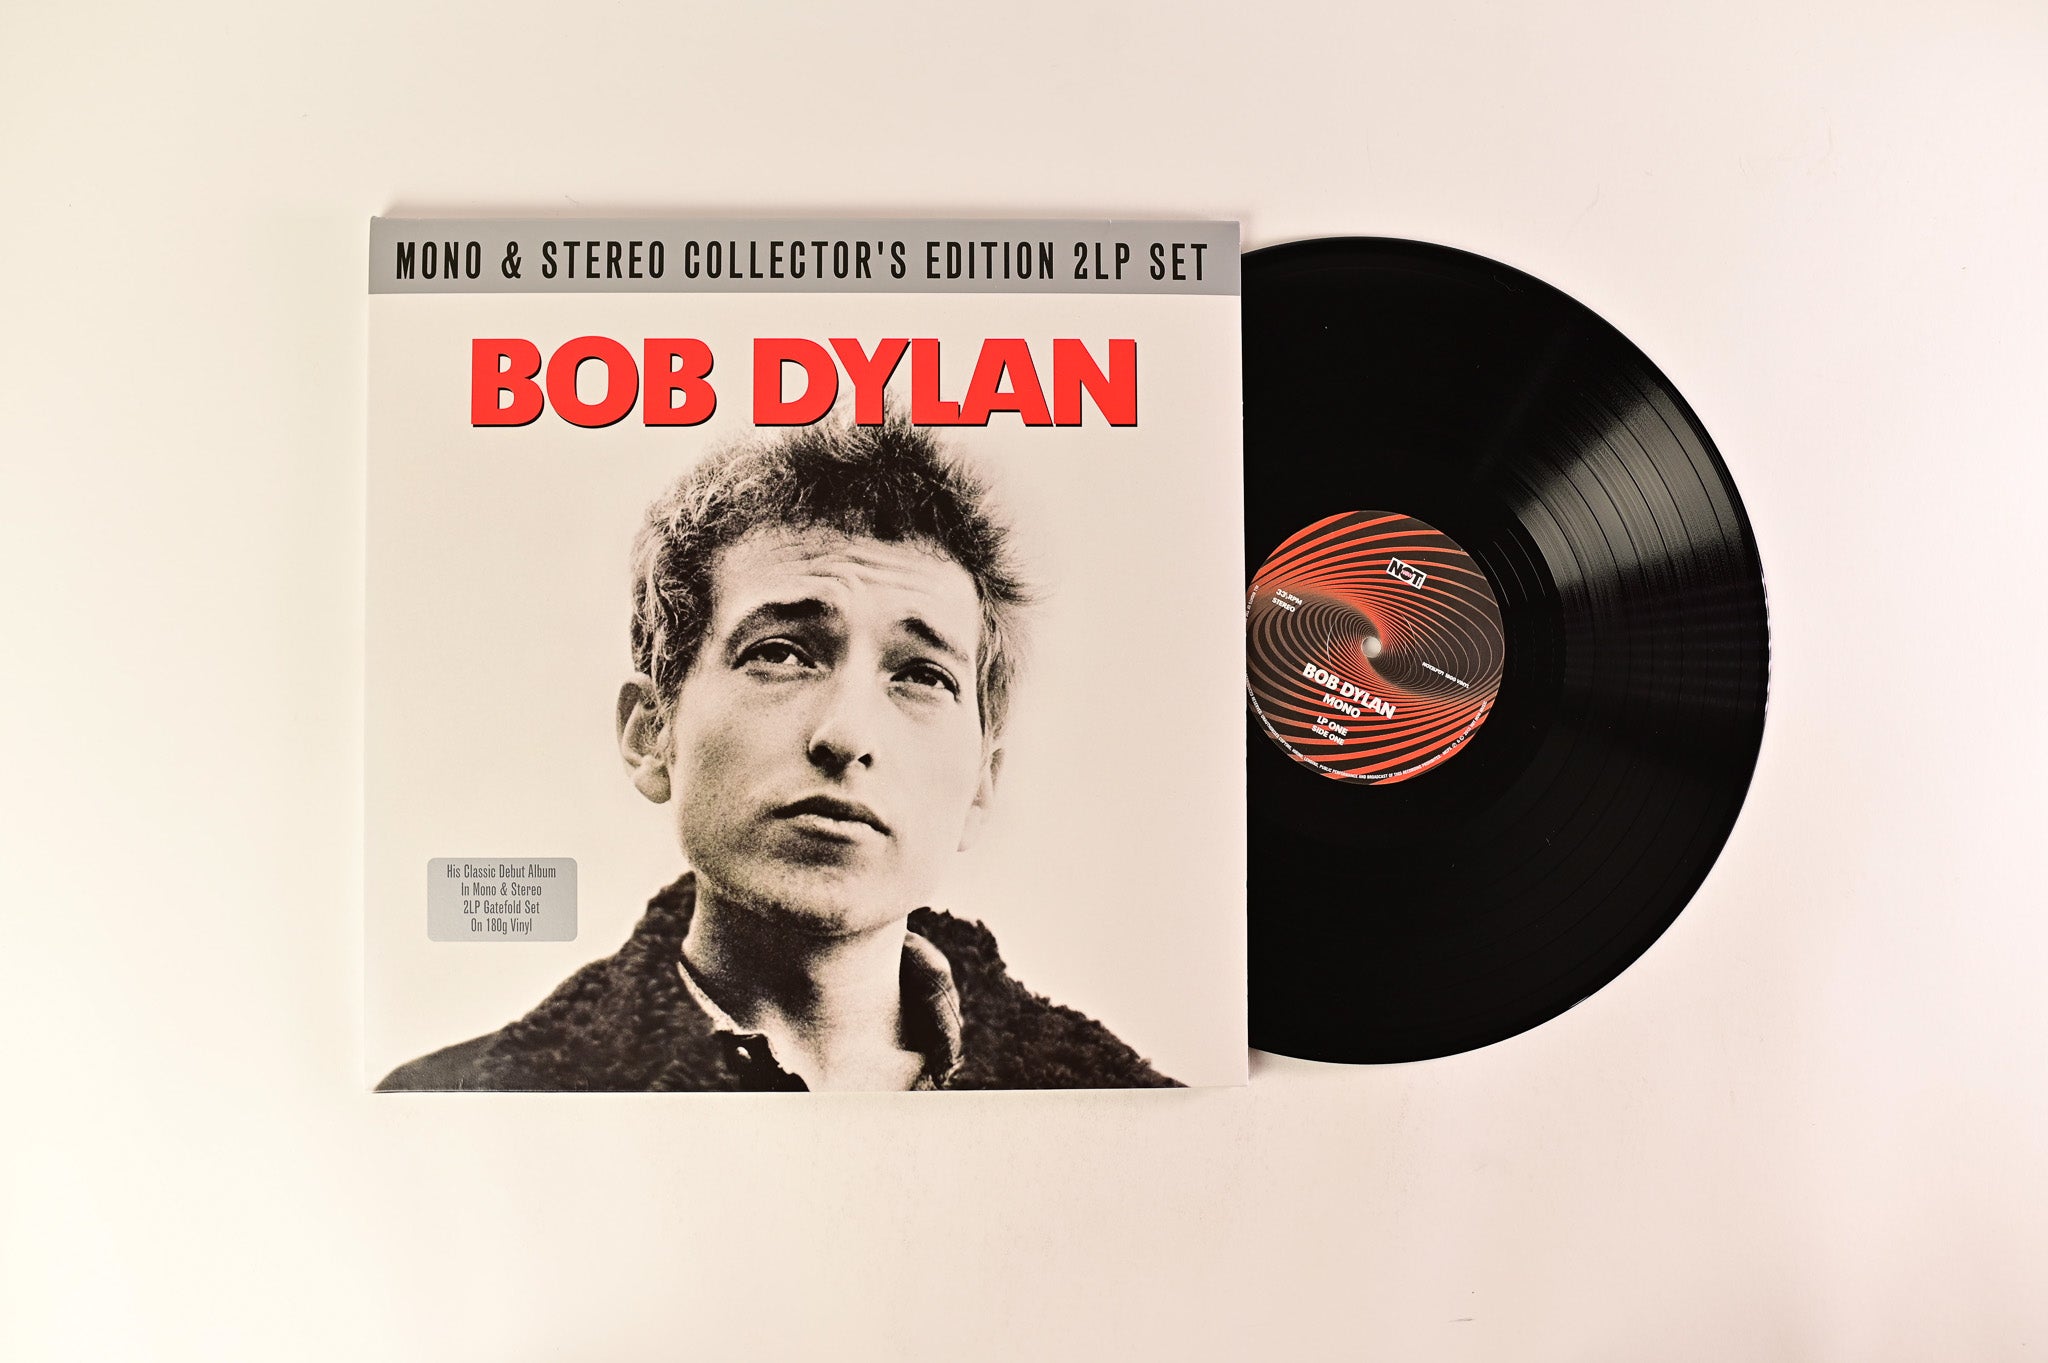 Bob Dylan - Bob Dylan on Not Now Music